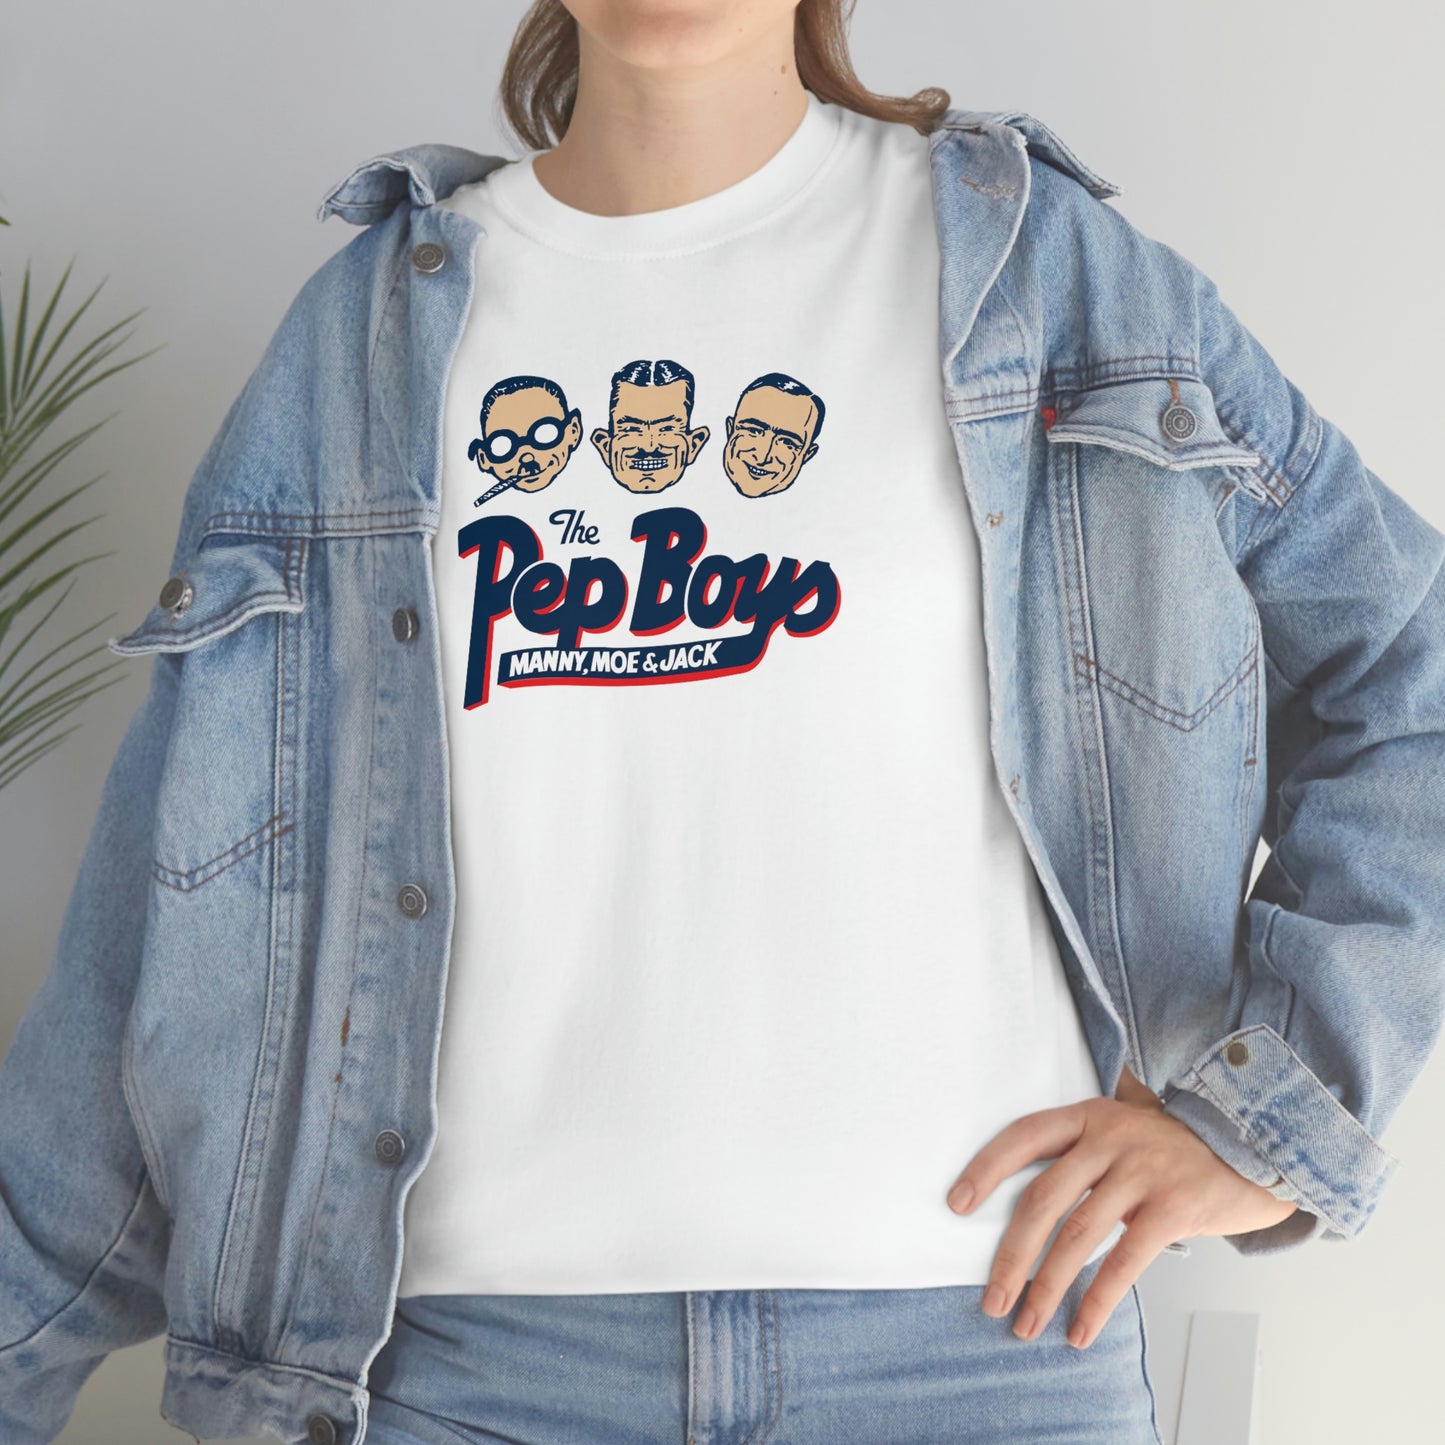 Pep Boys T-Shirt